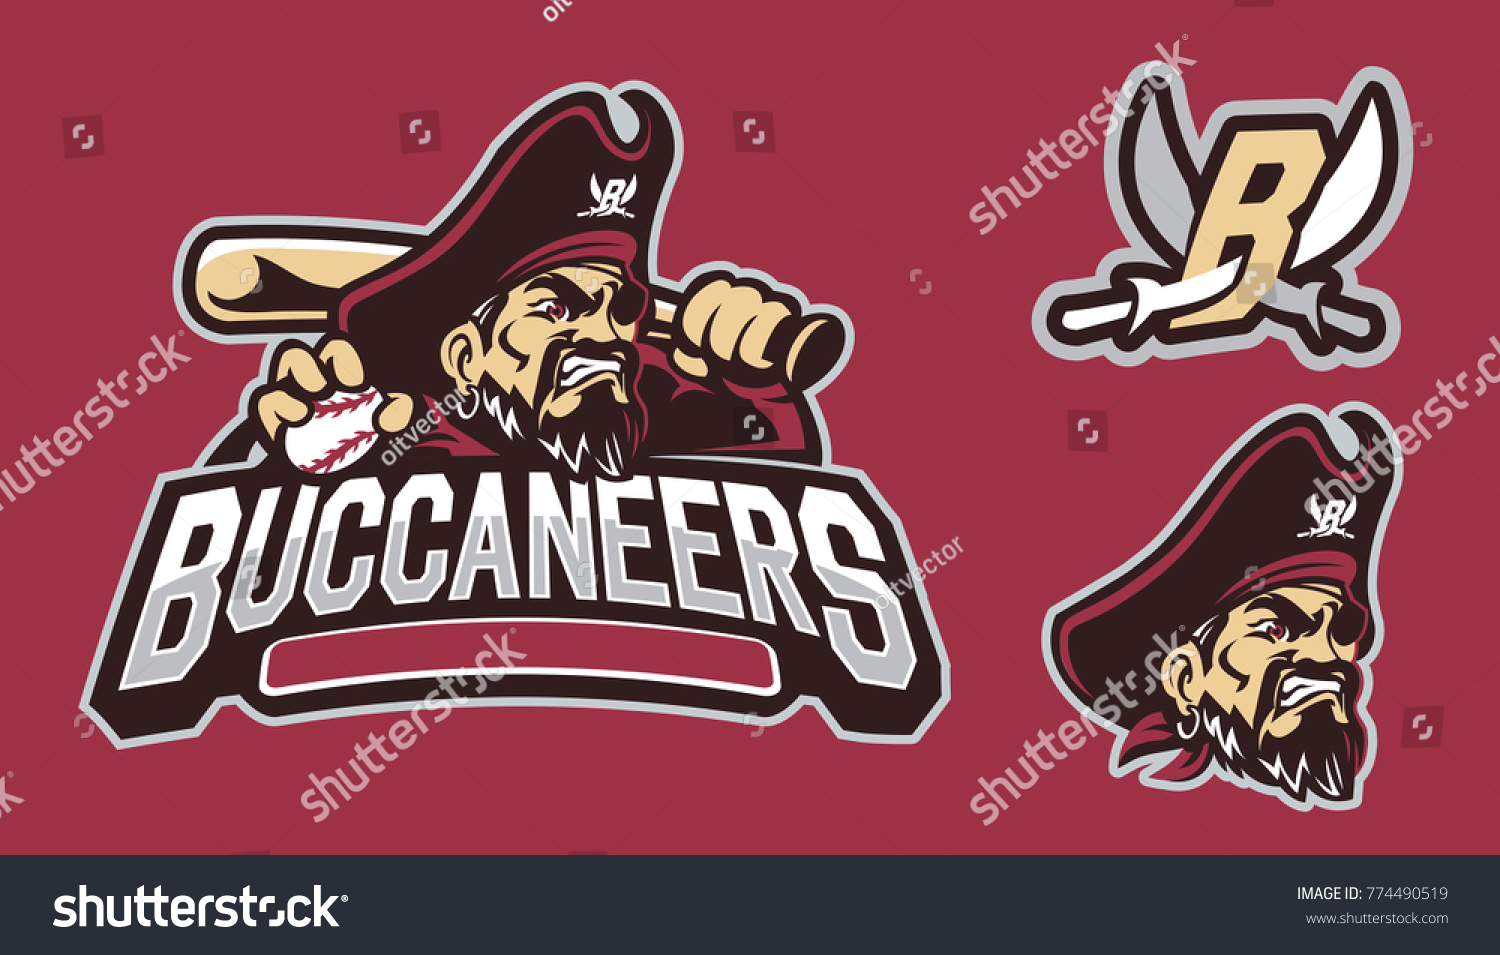 SVG of Buccaneer or Pirate Mascot Logo Design : Layered Vector Illustration - Easy to Edit svg